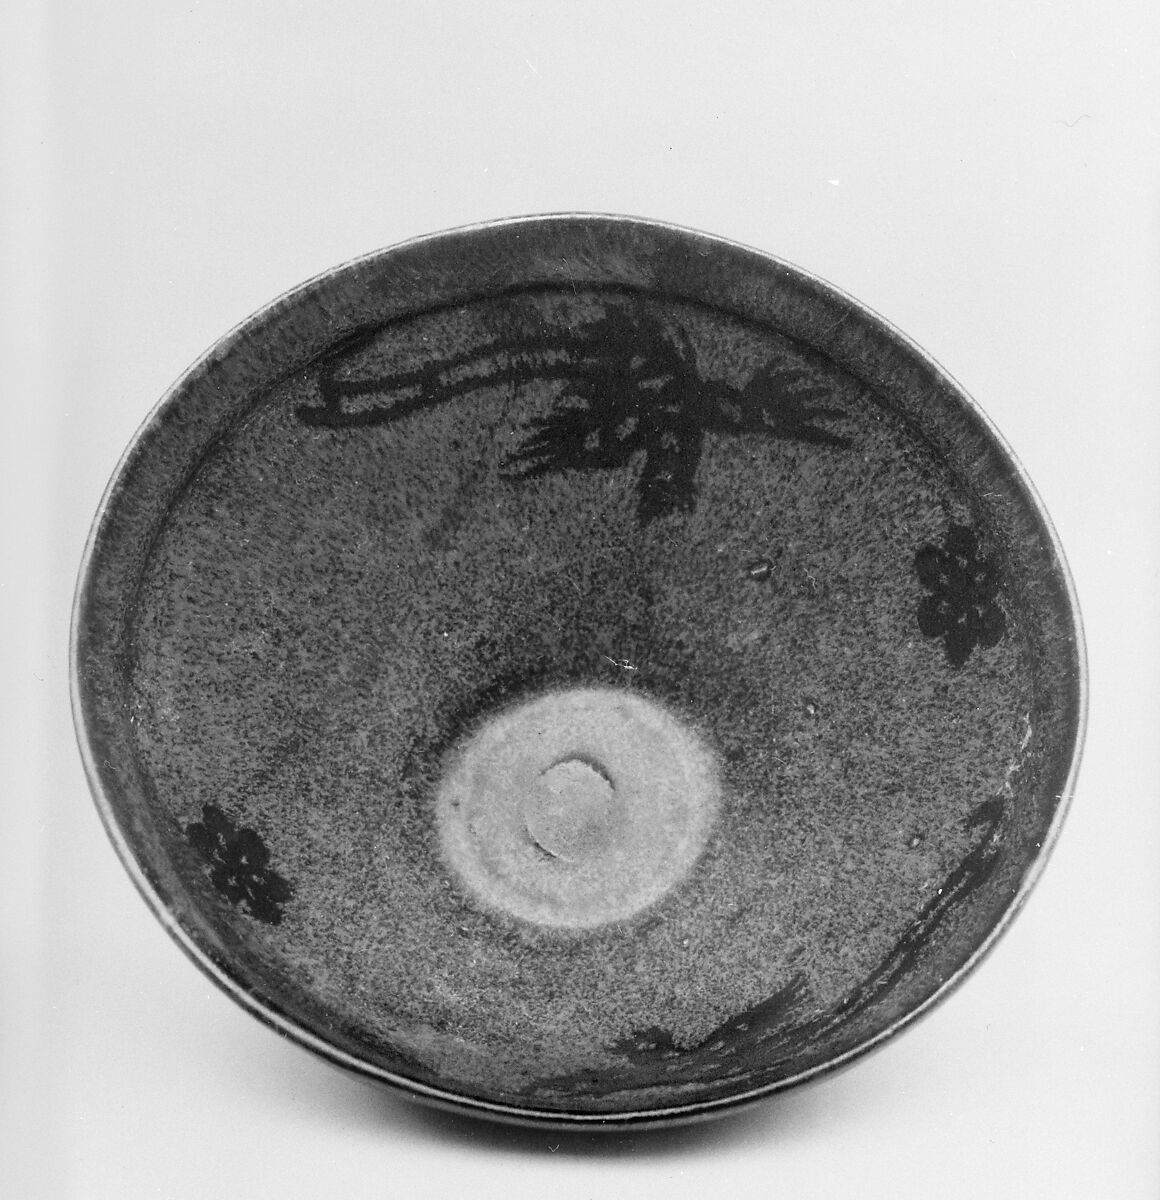 Bowl, Pottery (Jian ware), China 